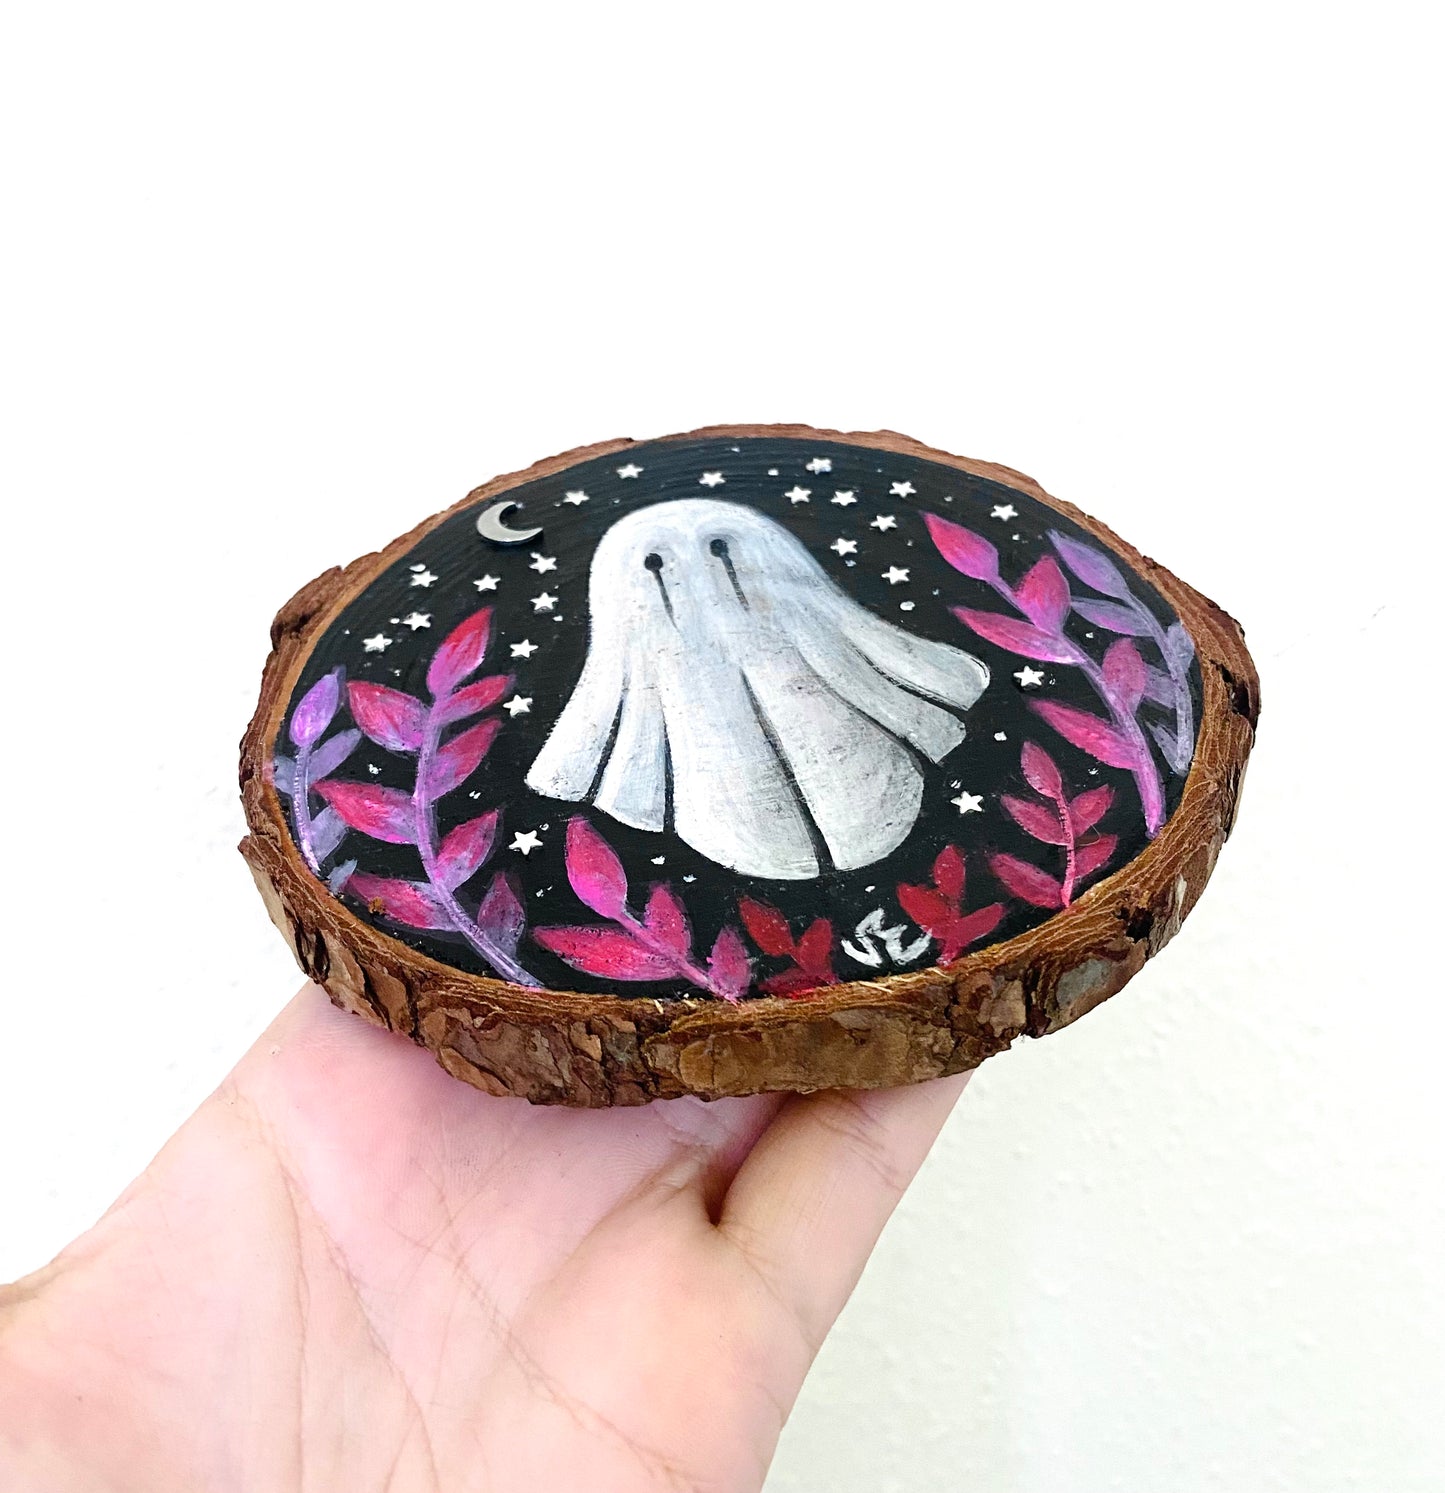 Hand-painted ghostie wood slice / Kézzel festett szellemes fakorong